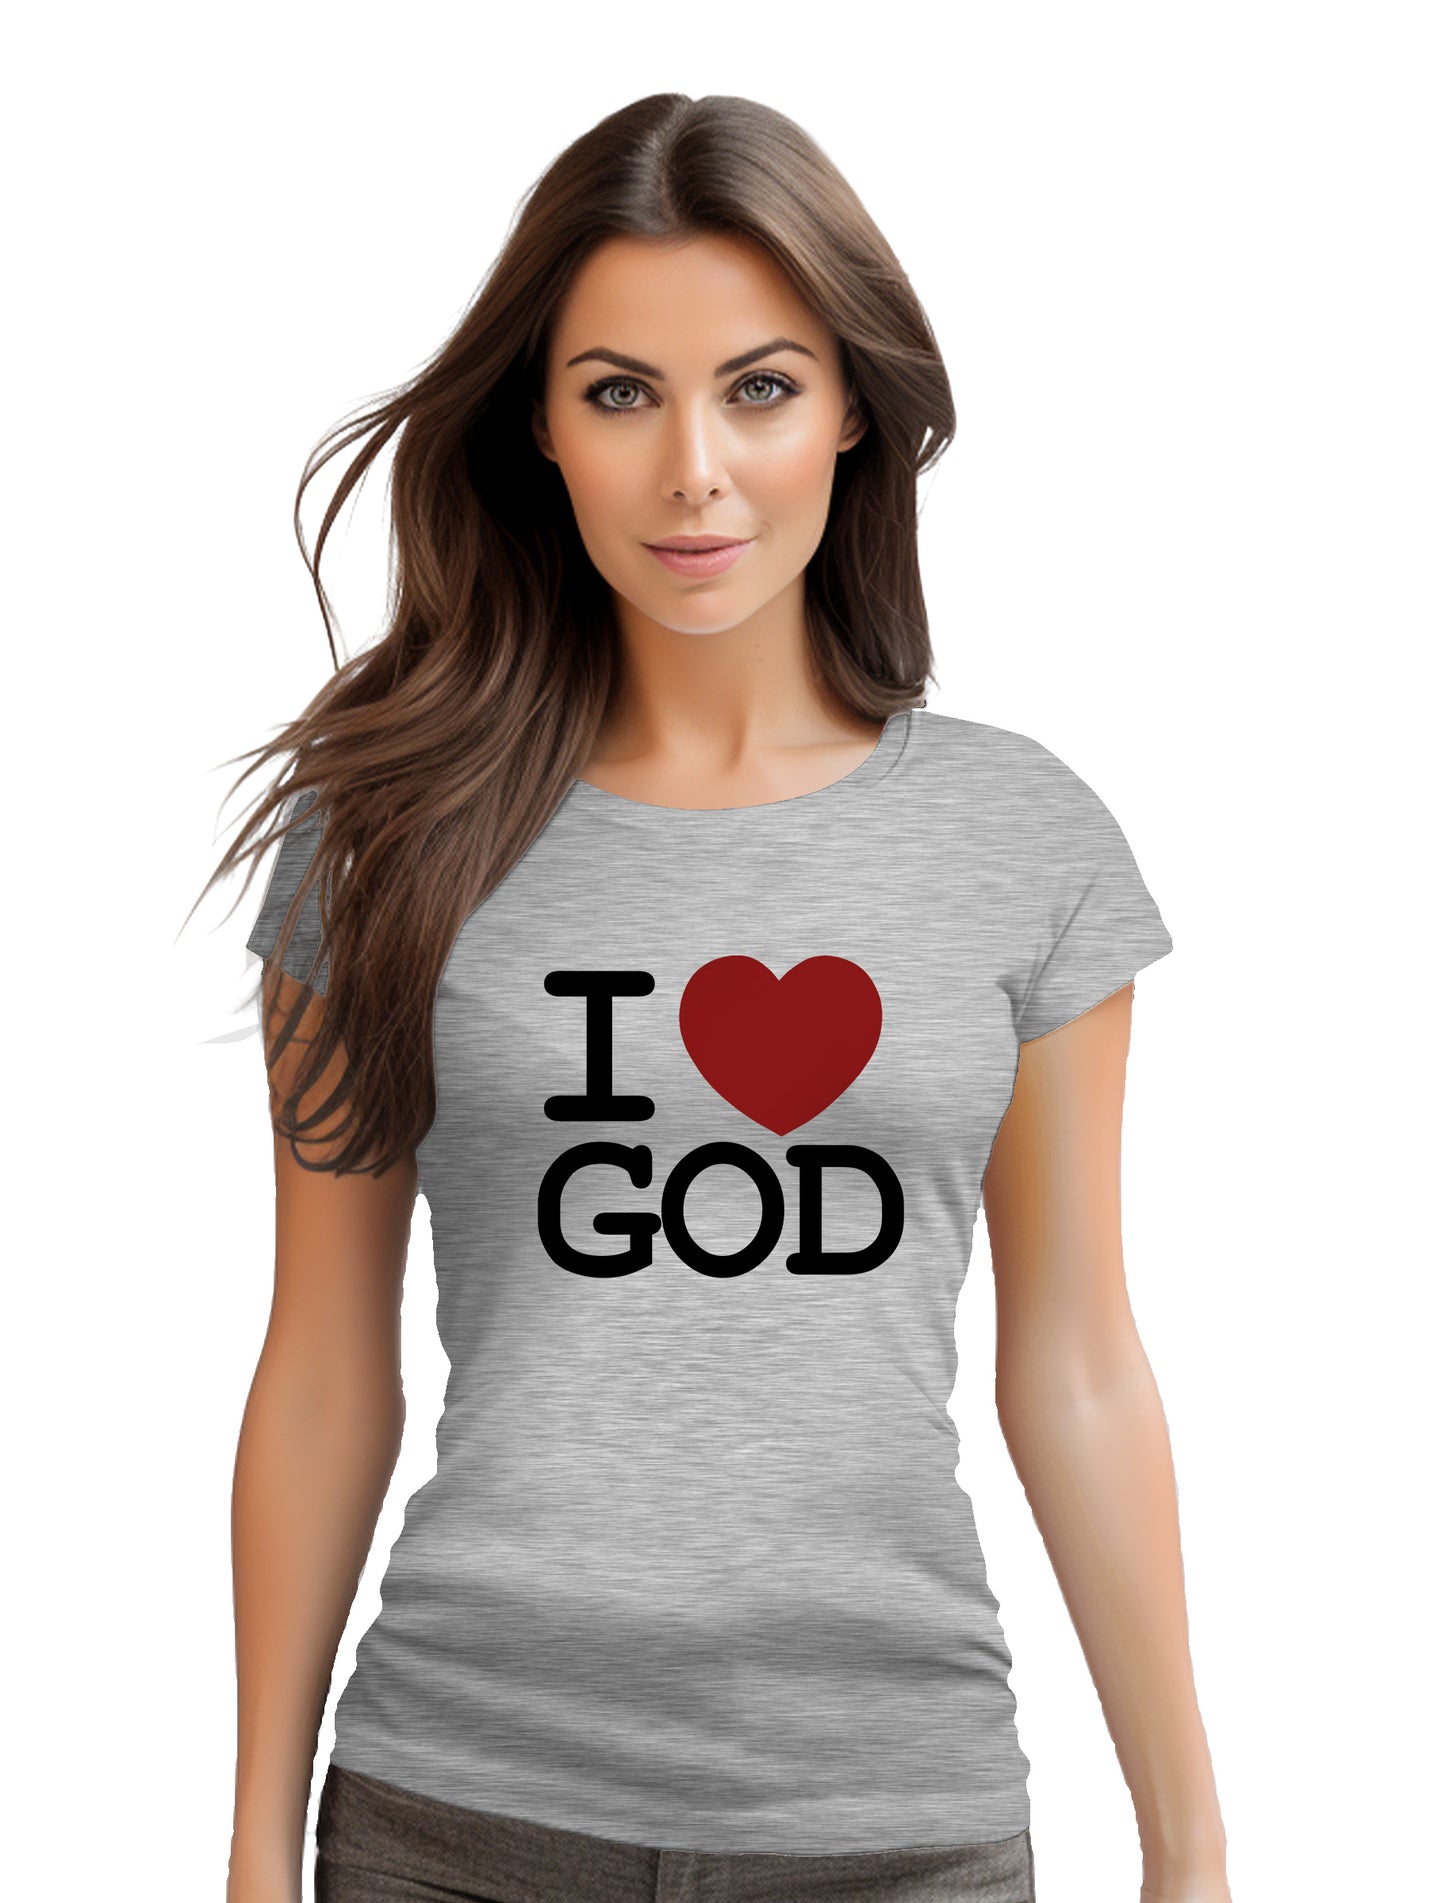 I LOVE GOD- Women's short sleeve fitted tee